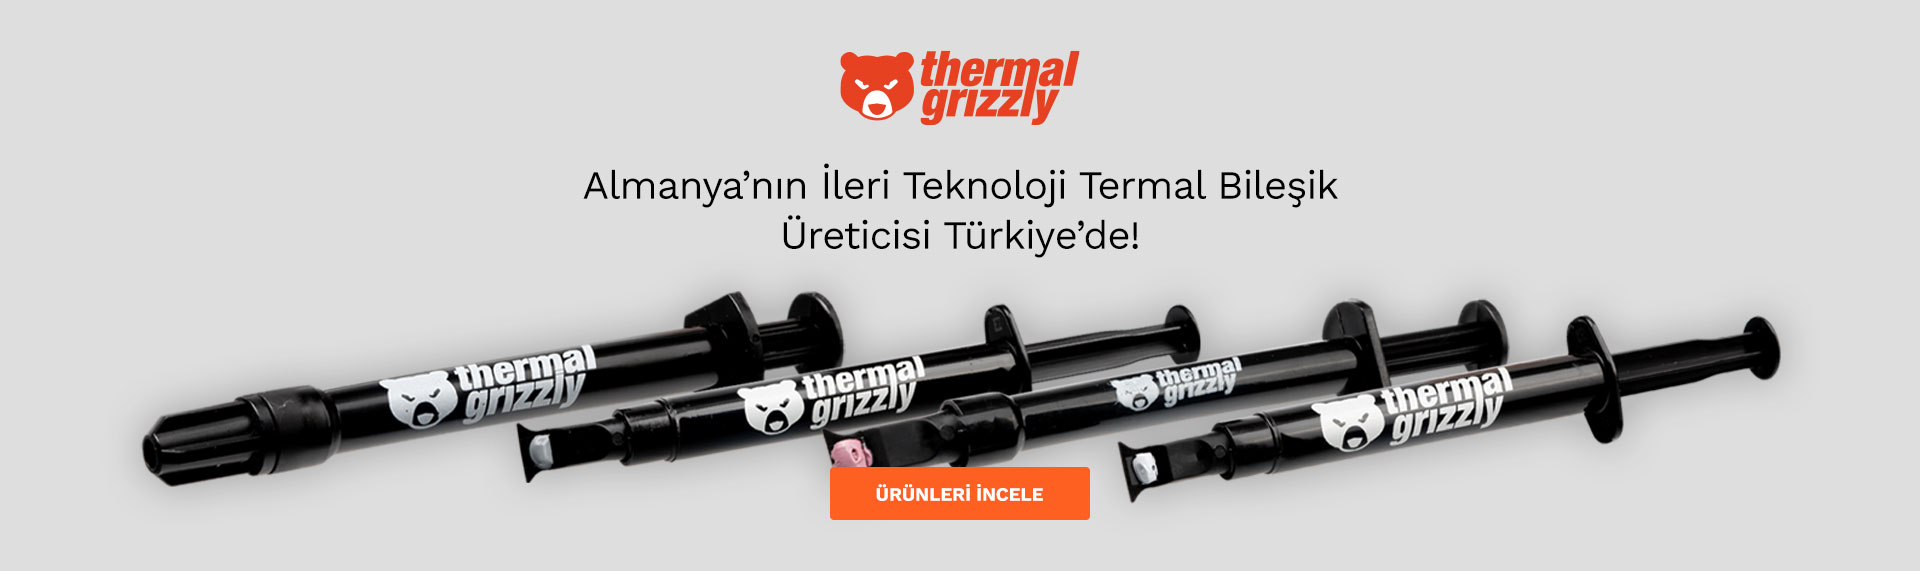 Thermal Girzzyl